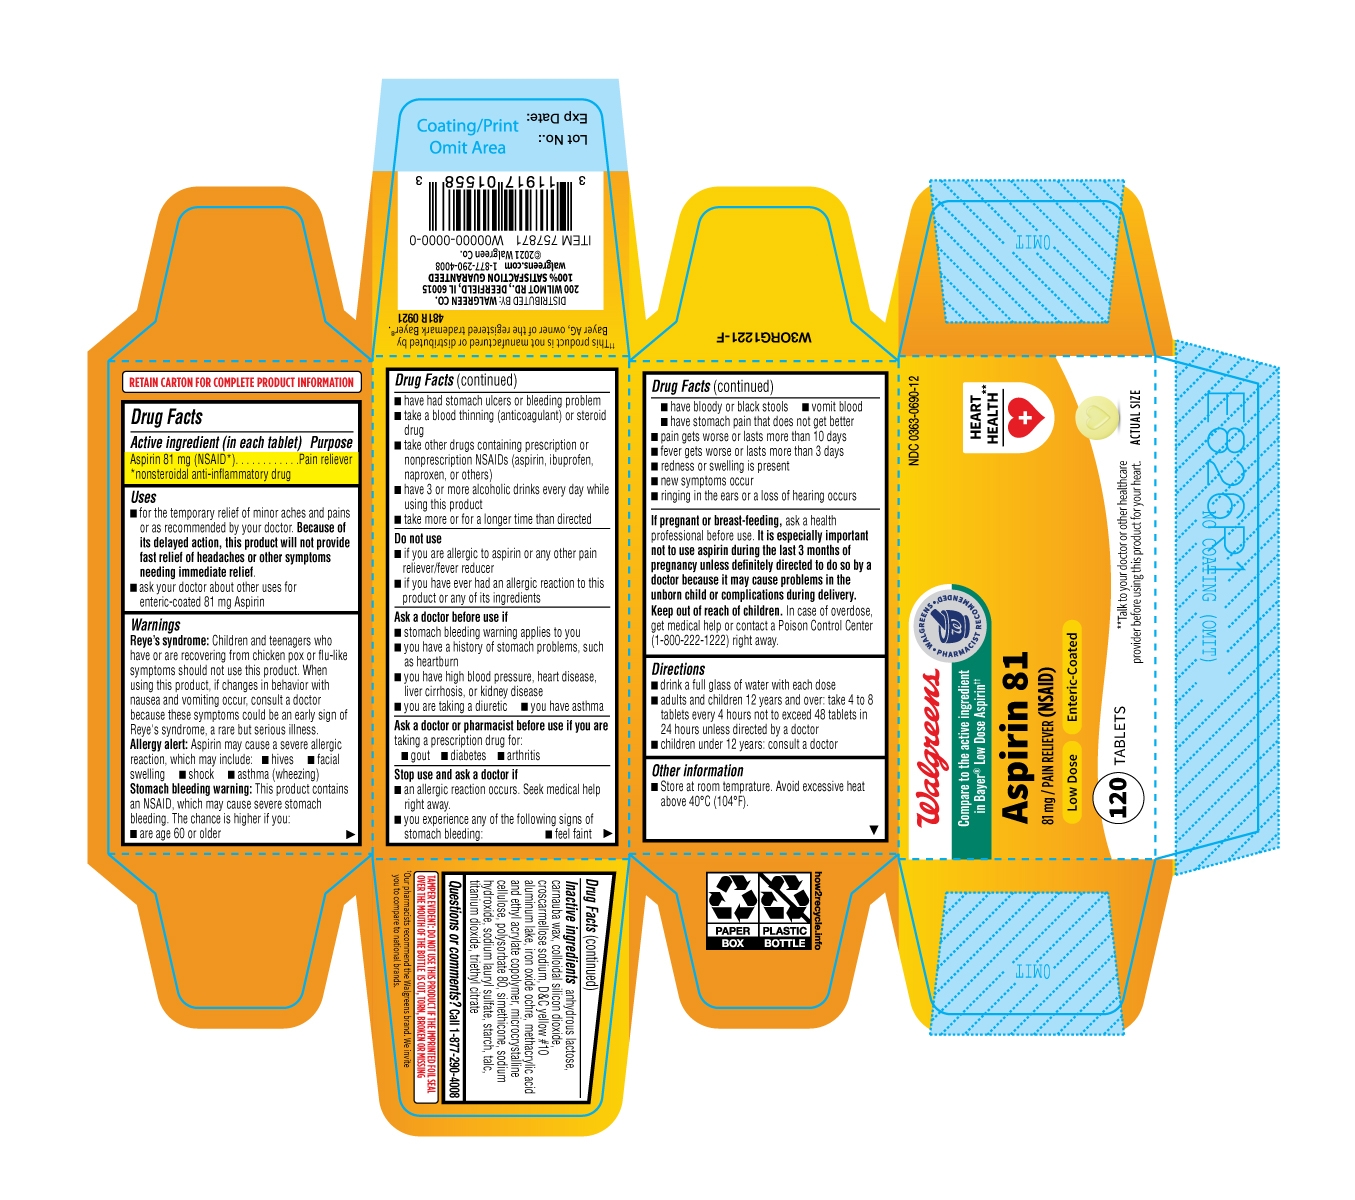 481R-Walgreens-Aspirin-carton-label-120s